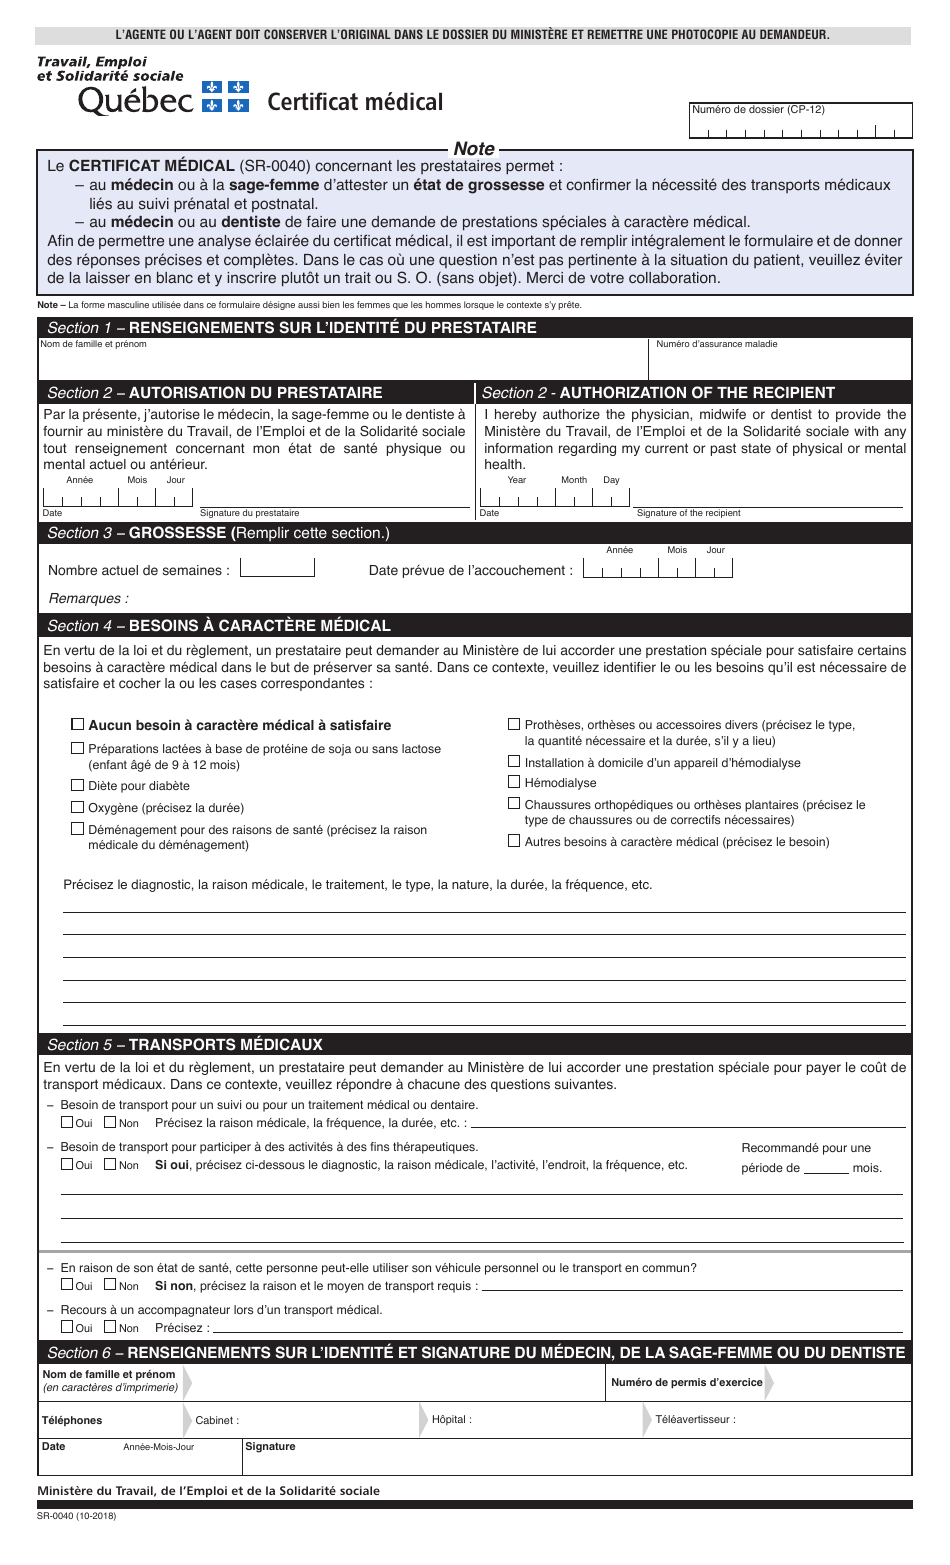 Forme SR-0040 Certificat Medical - Quebec, Canada (French), Page 1